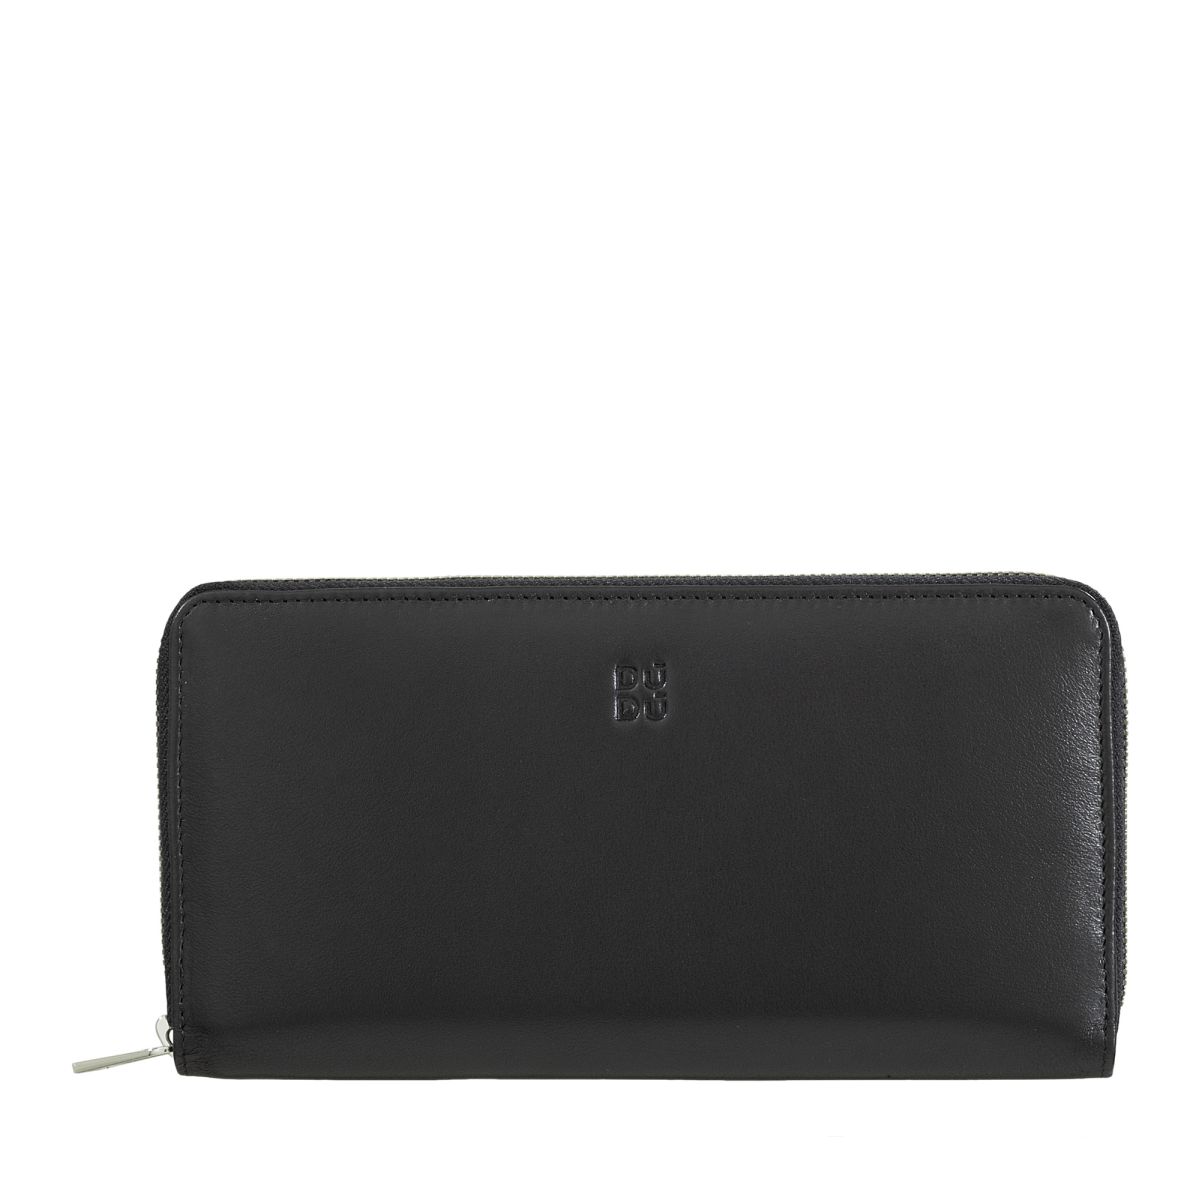 DuDu Leather zipper RFID wallet women's Colorful - Black